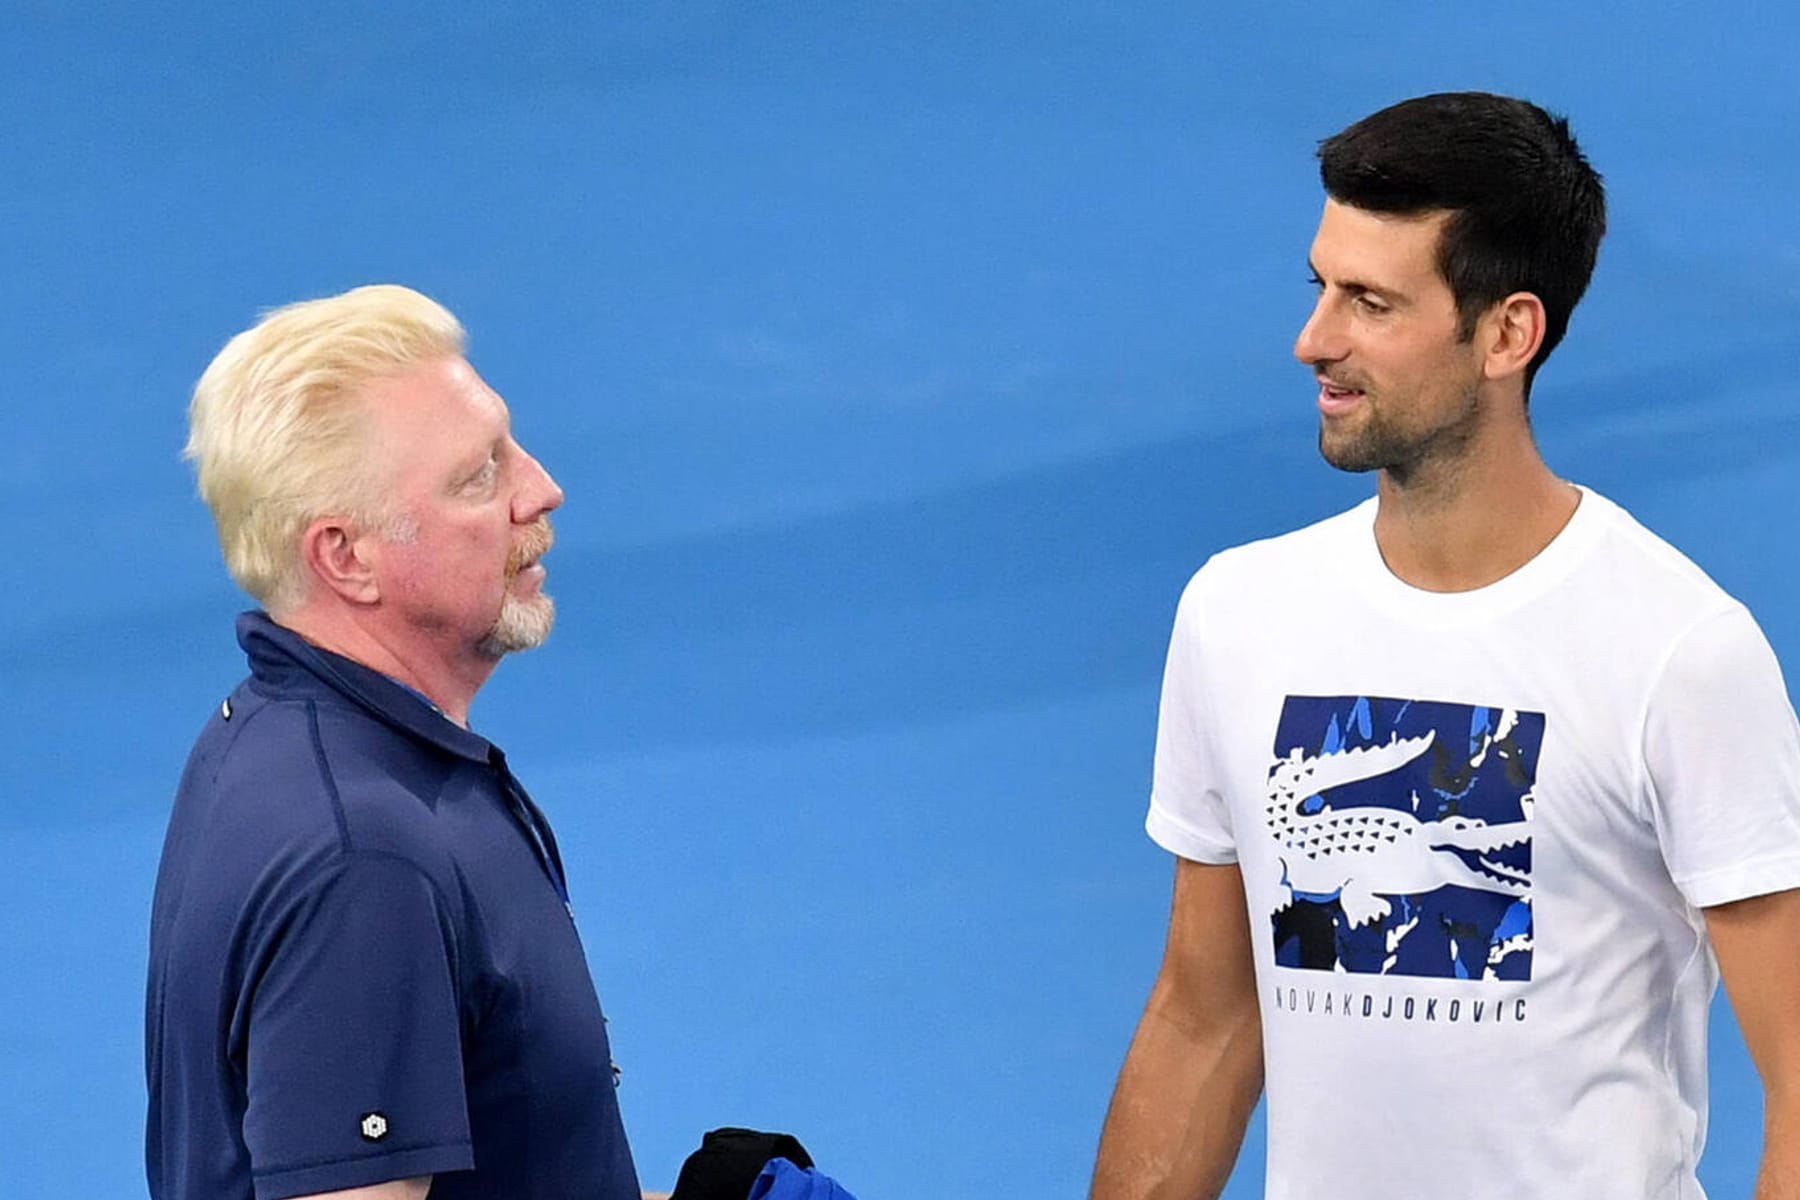 Teilnahme an Australian Open? Anhörung von Novak Djokovic wird live übertragen